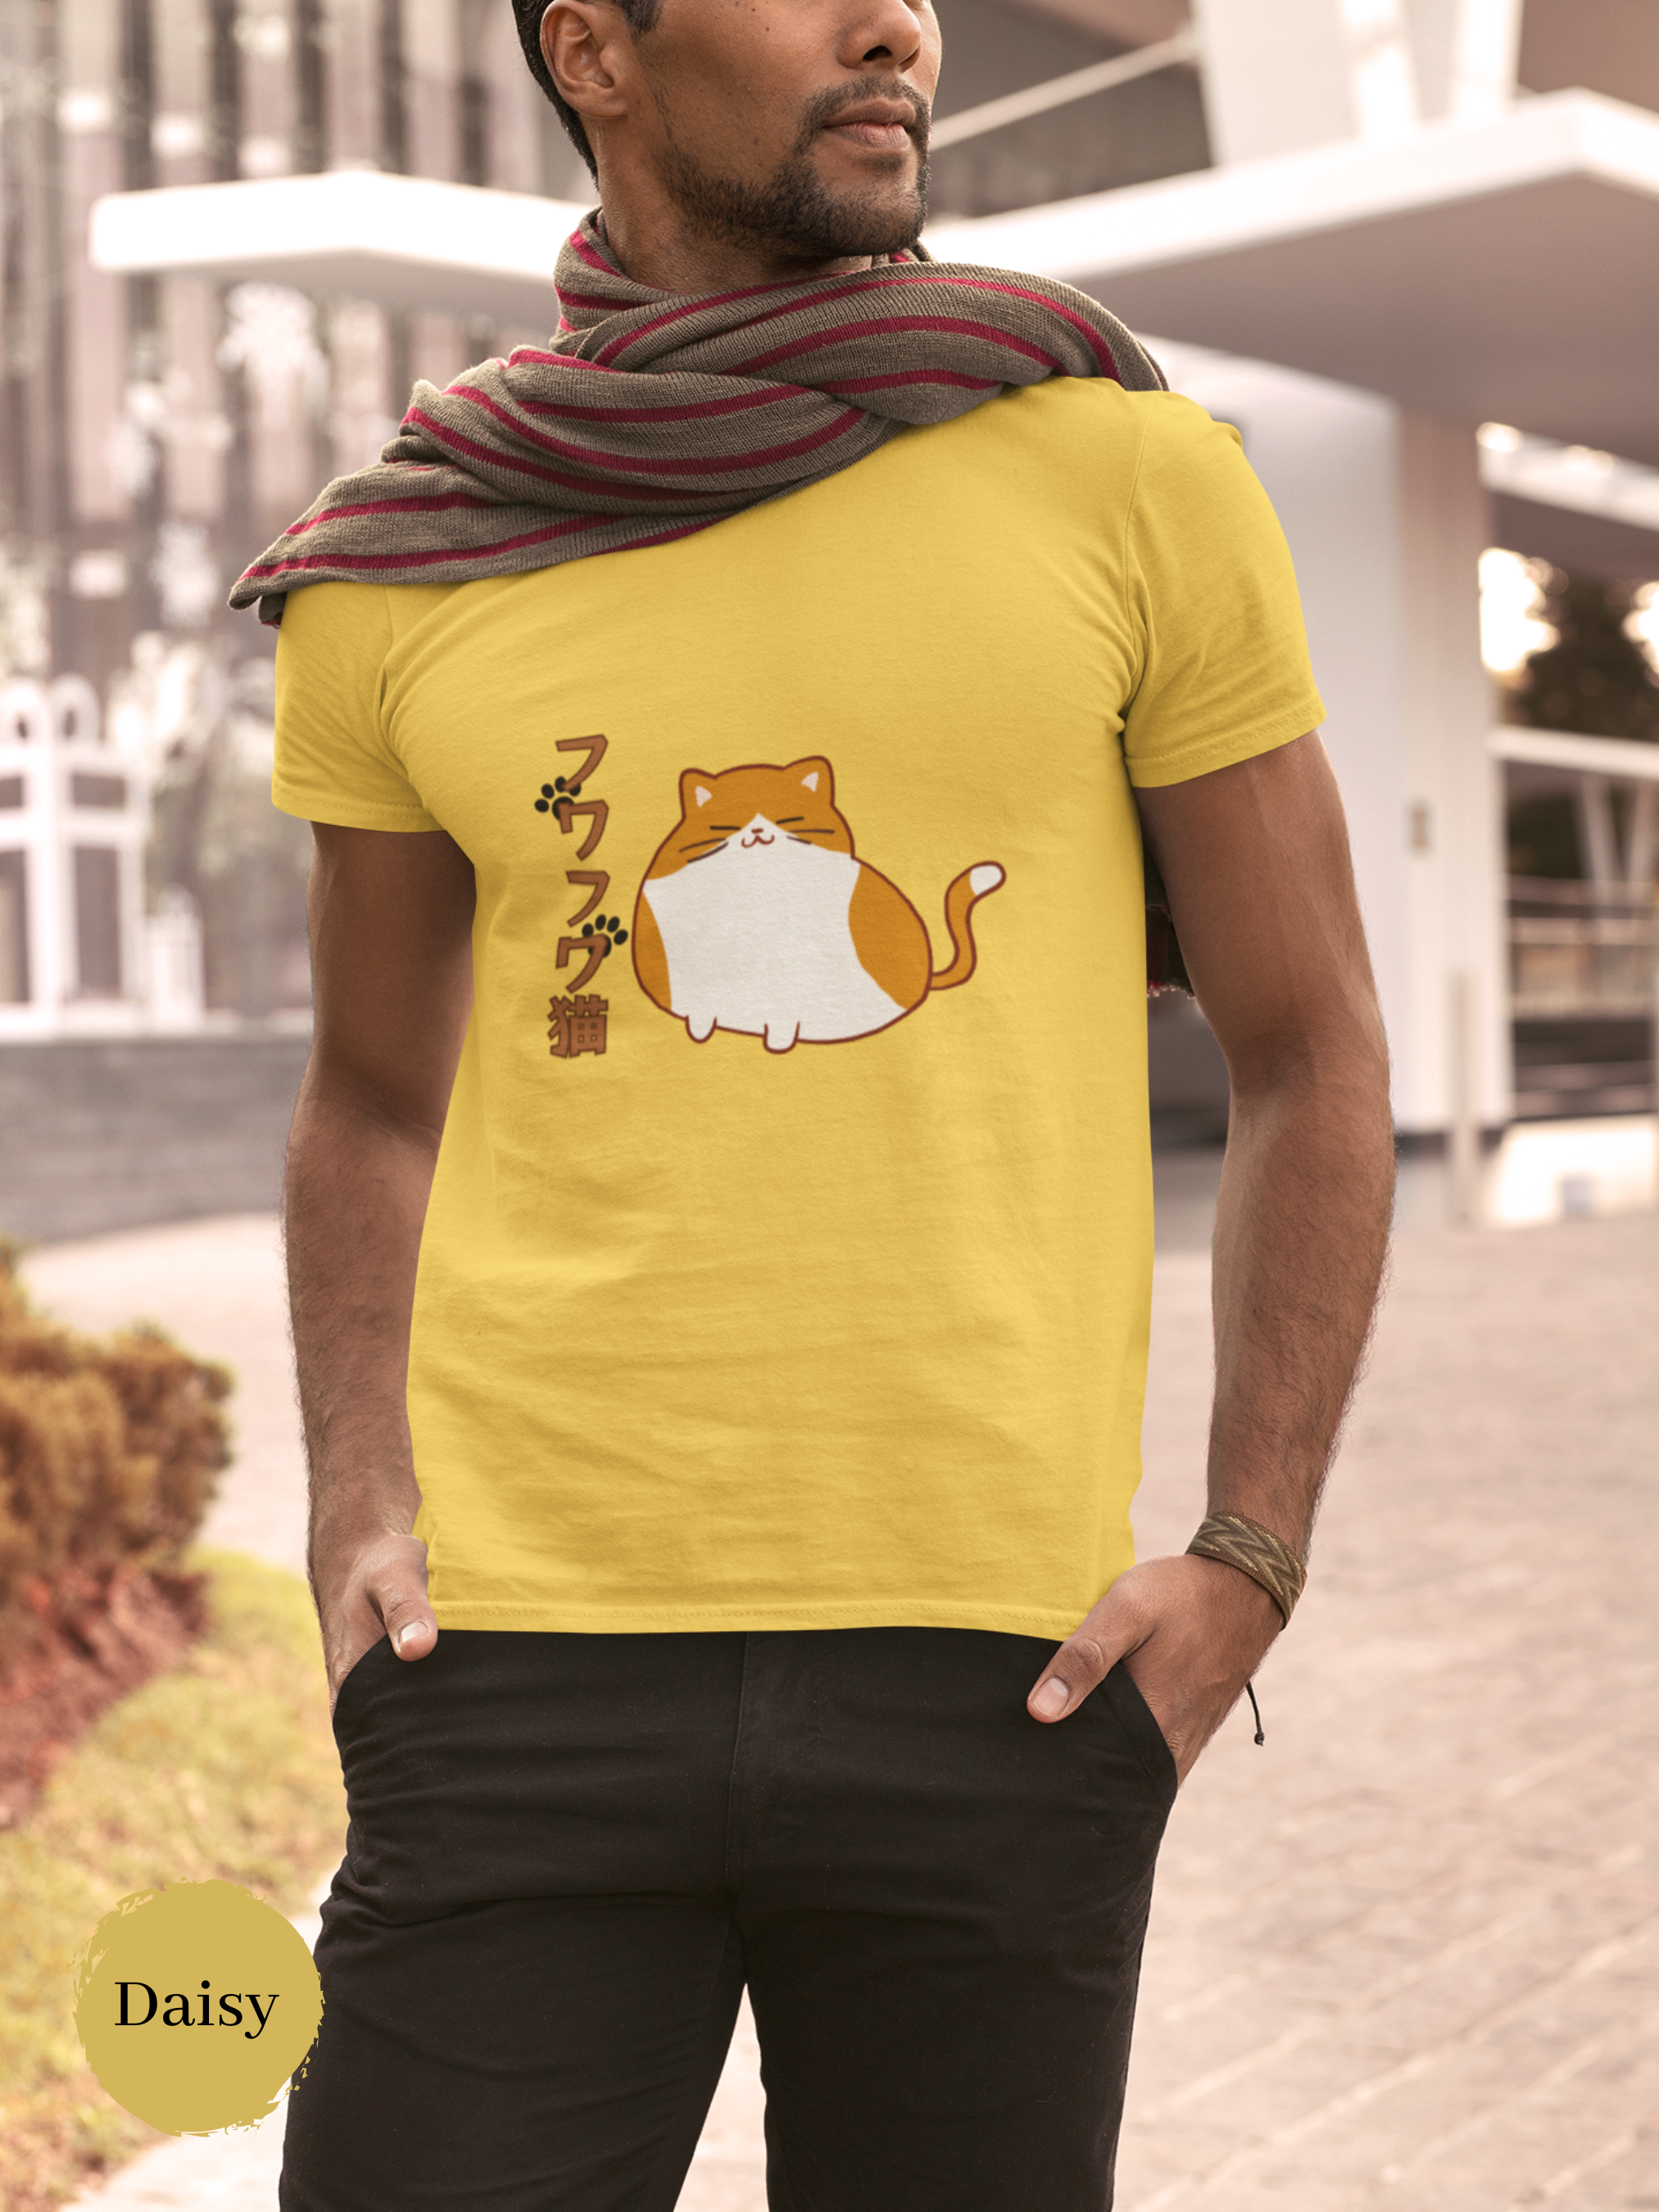 Cat T-shirt: "Fuwa Fuwa Neko" Fluffy Mochi Cat Japanese Shirt with Chubby Cat Illustration - Unique Cat Tee with a Touch of Mochi Cat Art